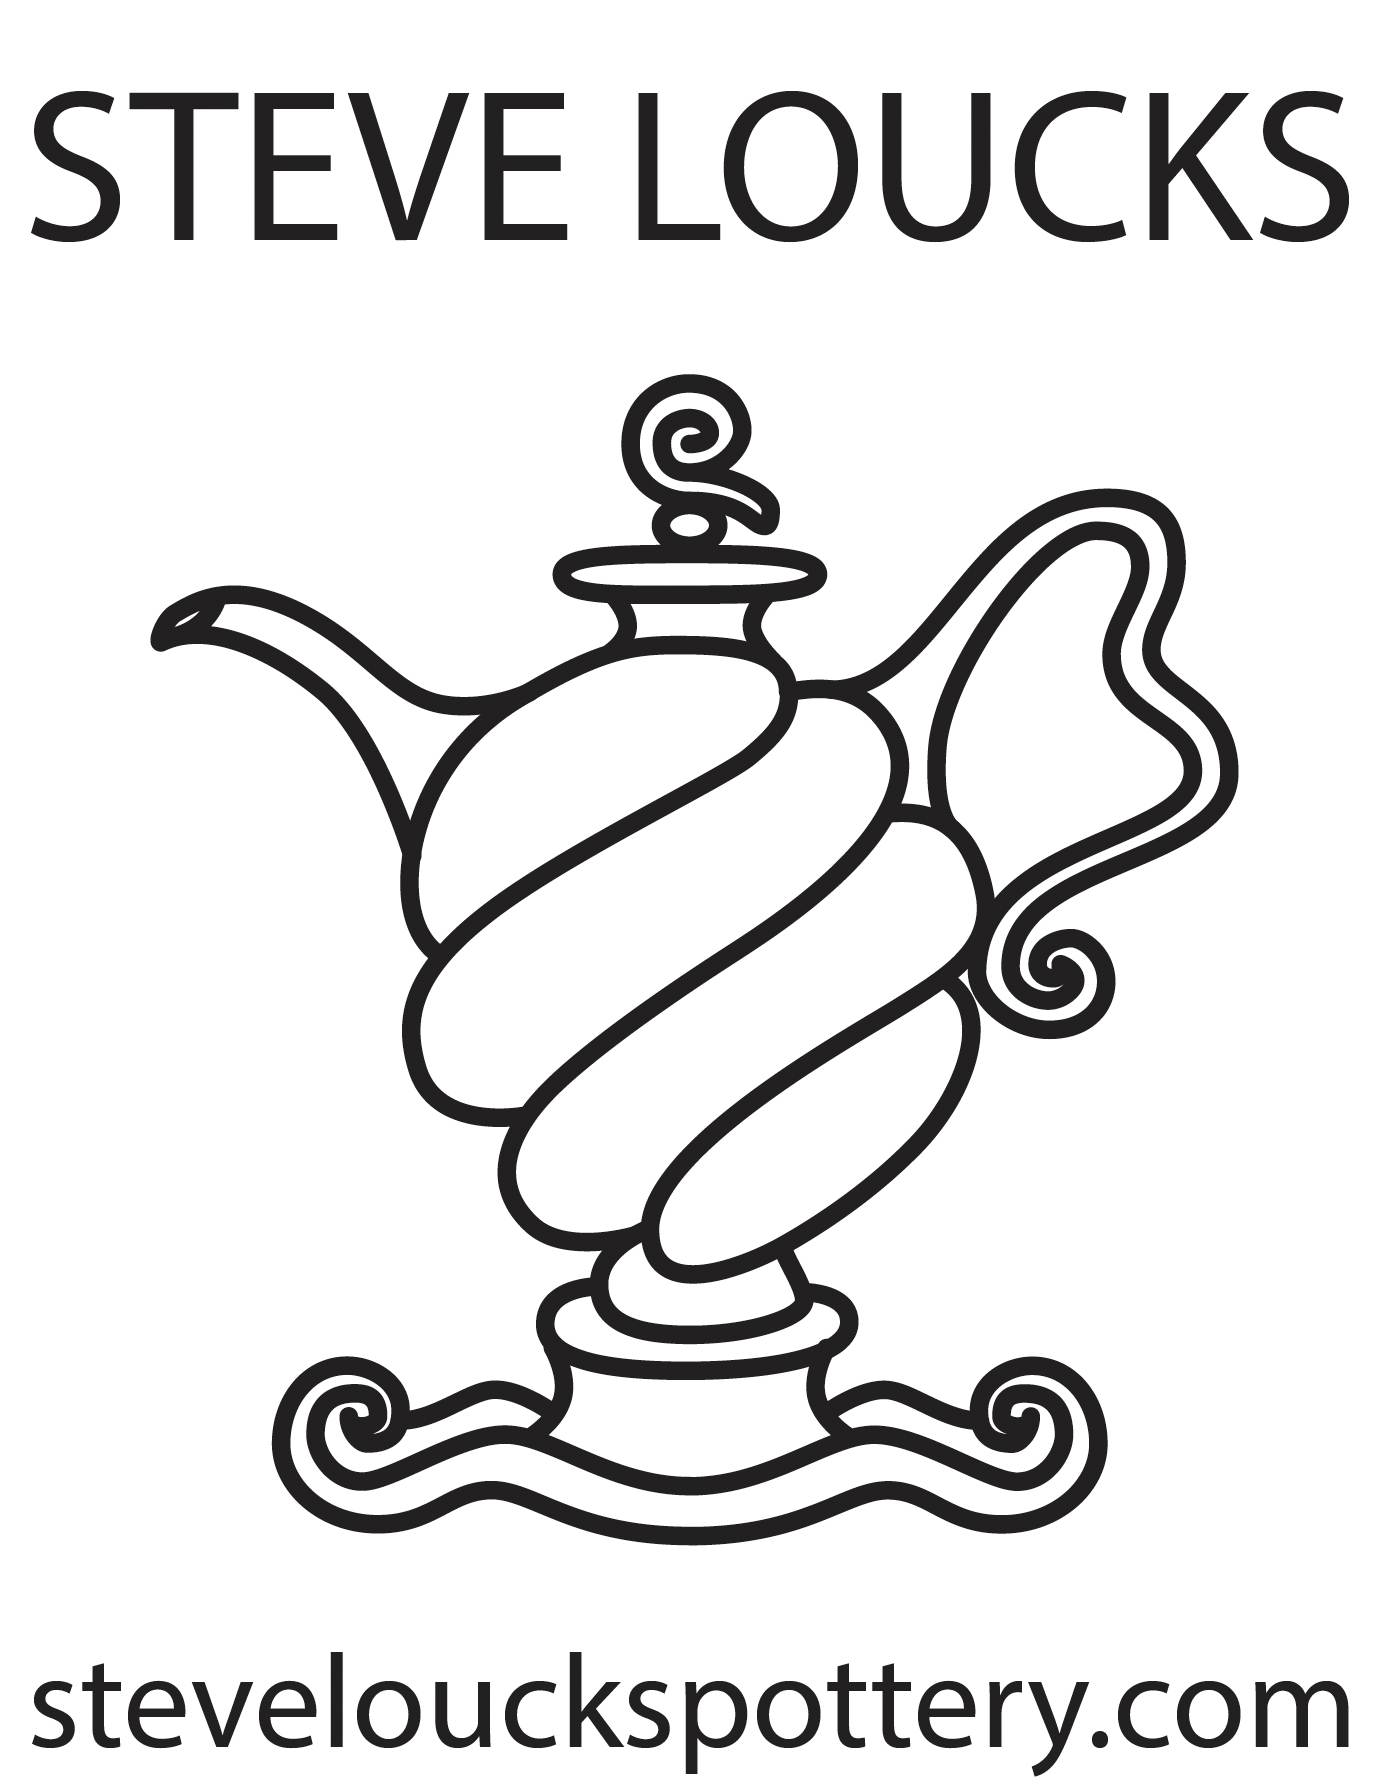 Steve Loucks Pottery